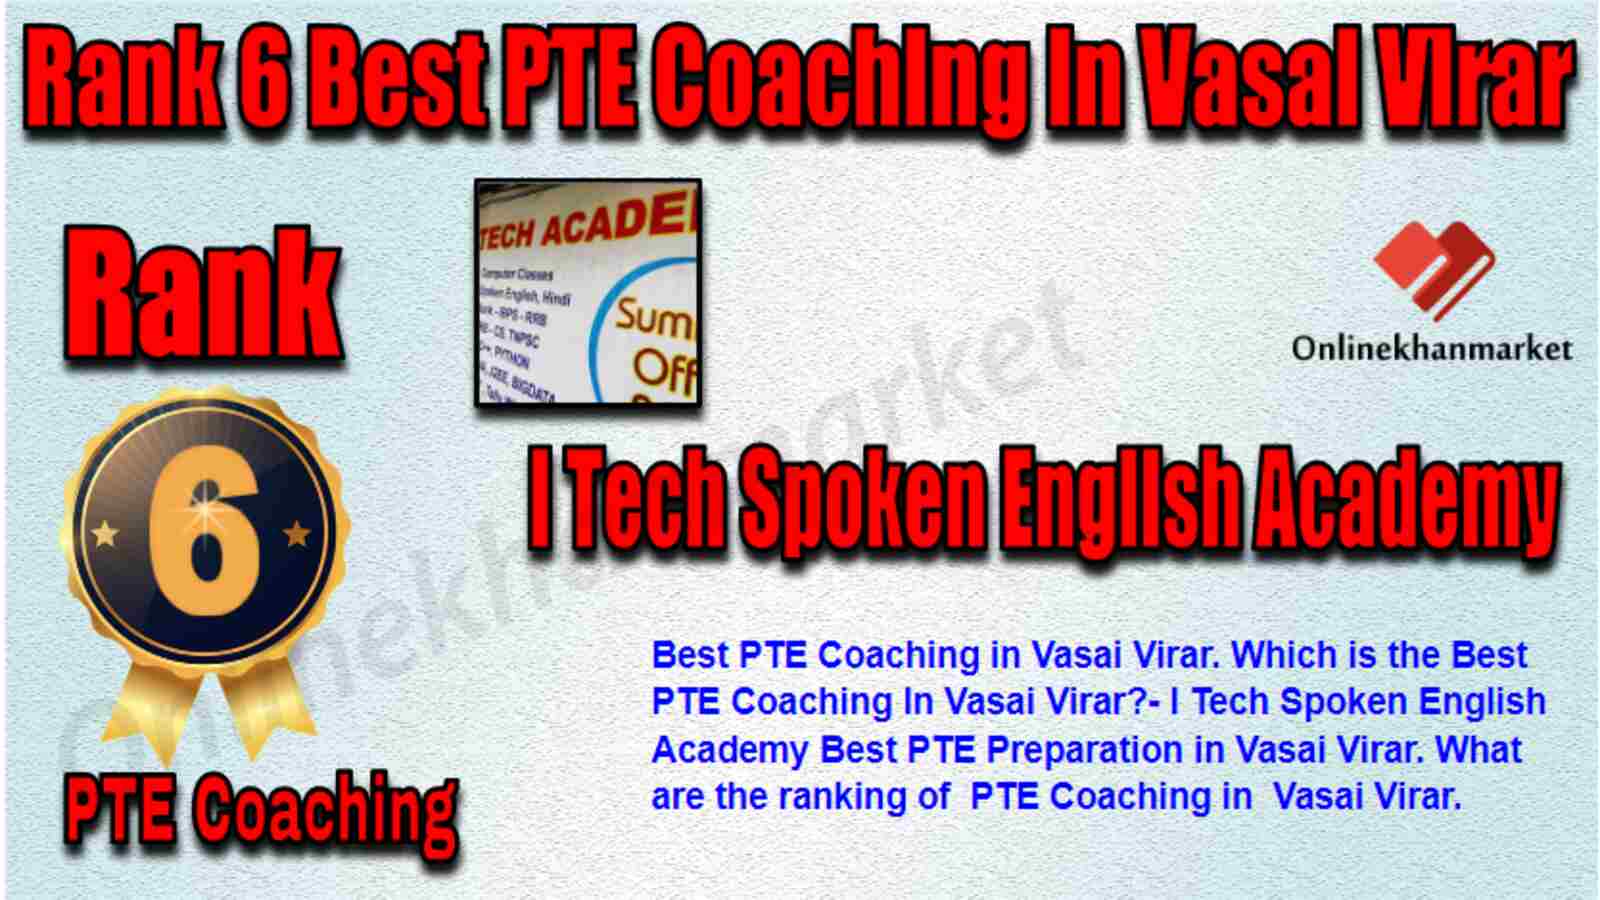 Rank 6 Best PTE Coaching in Vasai Virar